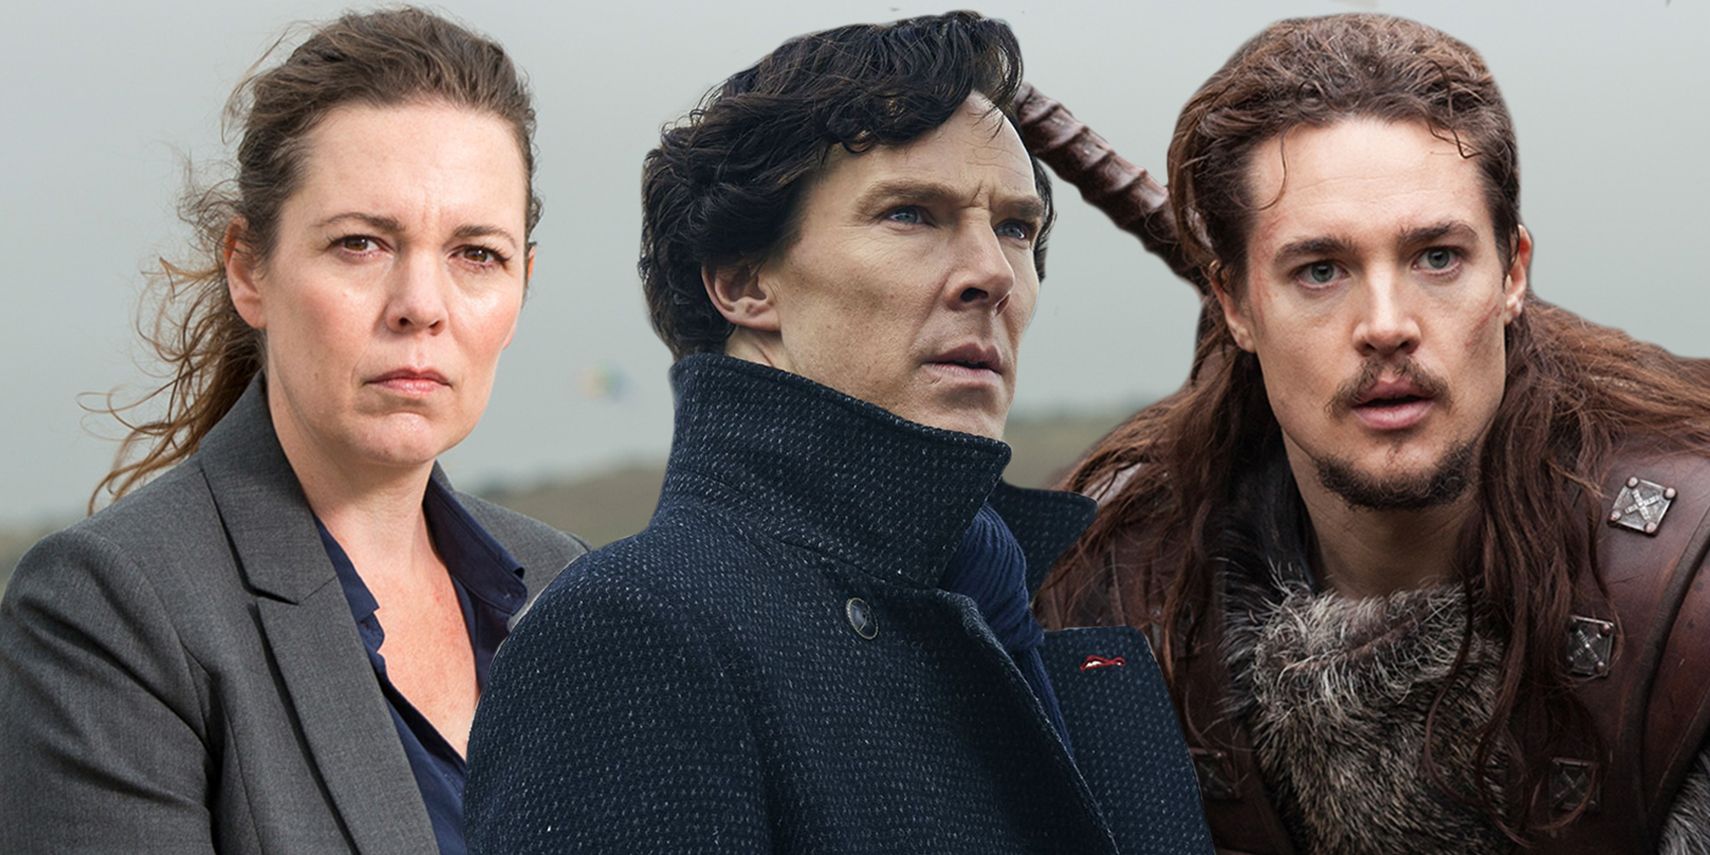 The 10 Best British Shows On Netflix Ranked (According To IMDb)